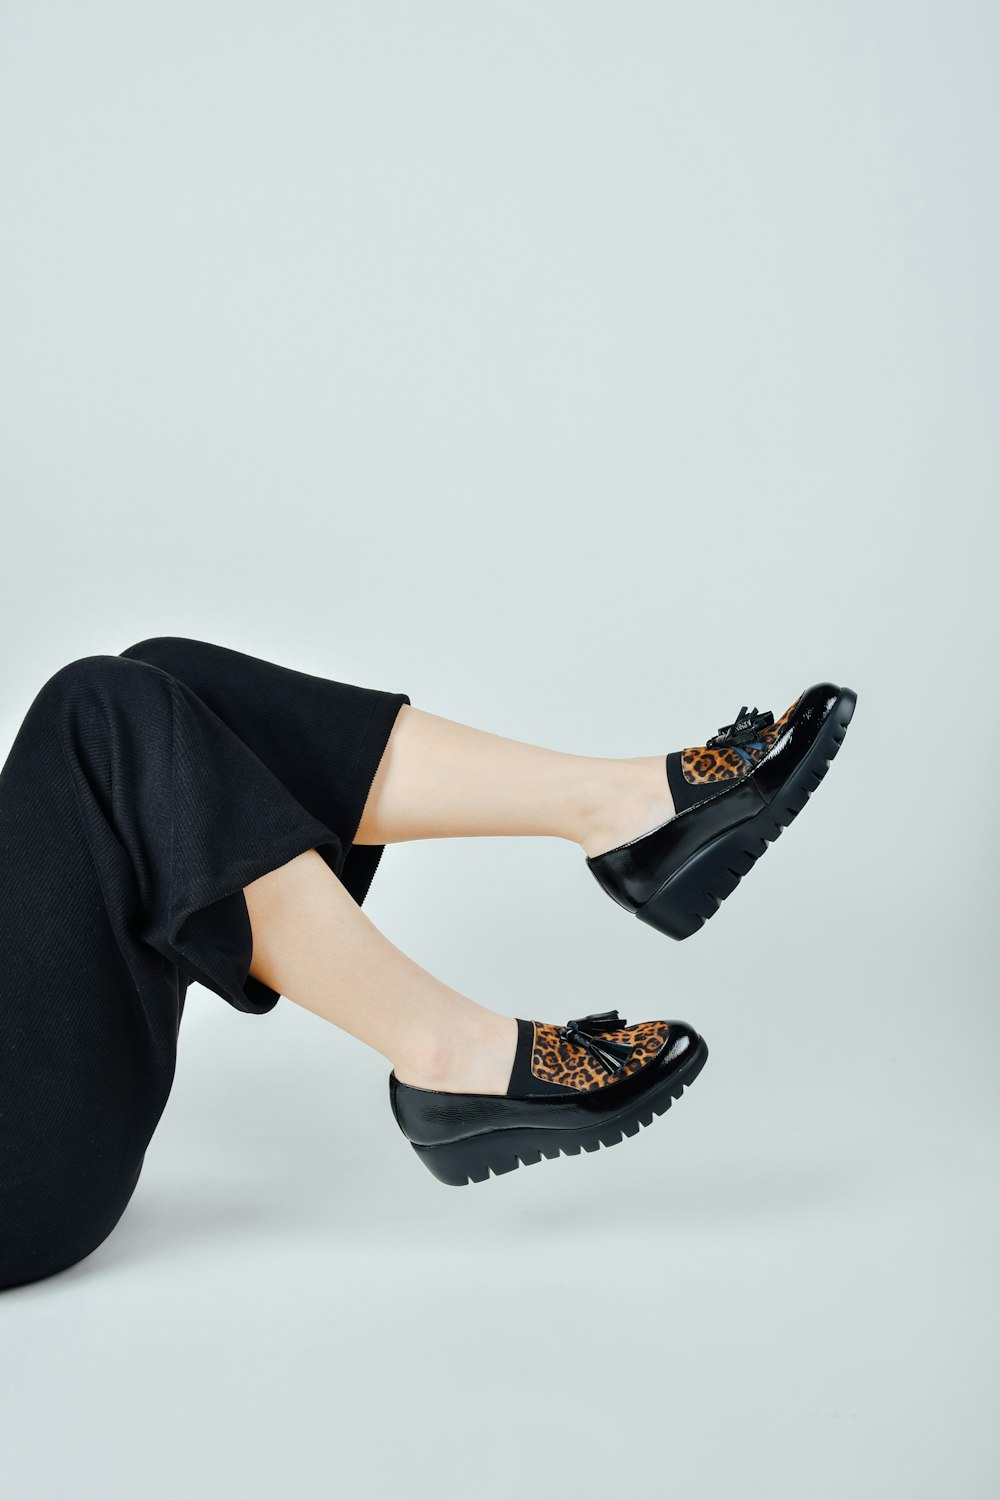 woman in black pants wearing black leather peep toe heeled shoes